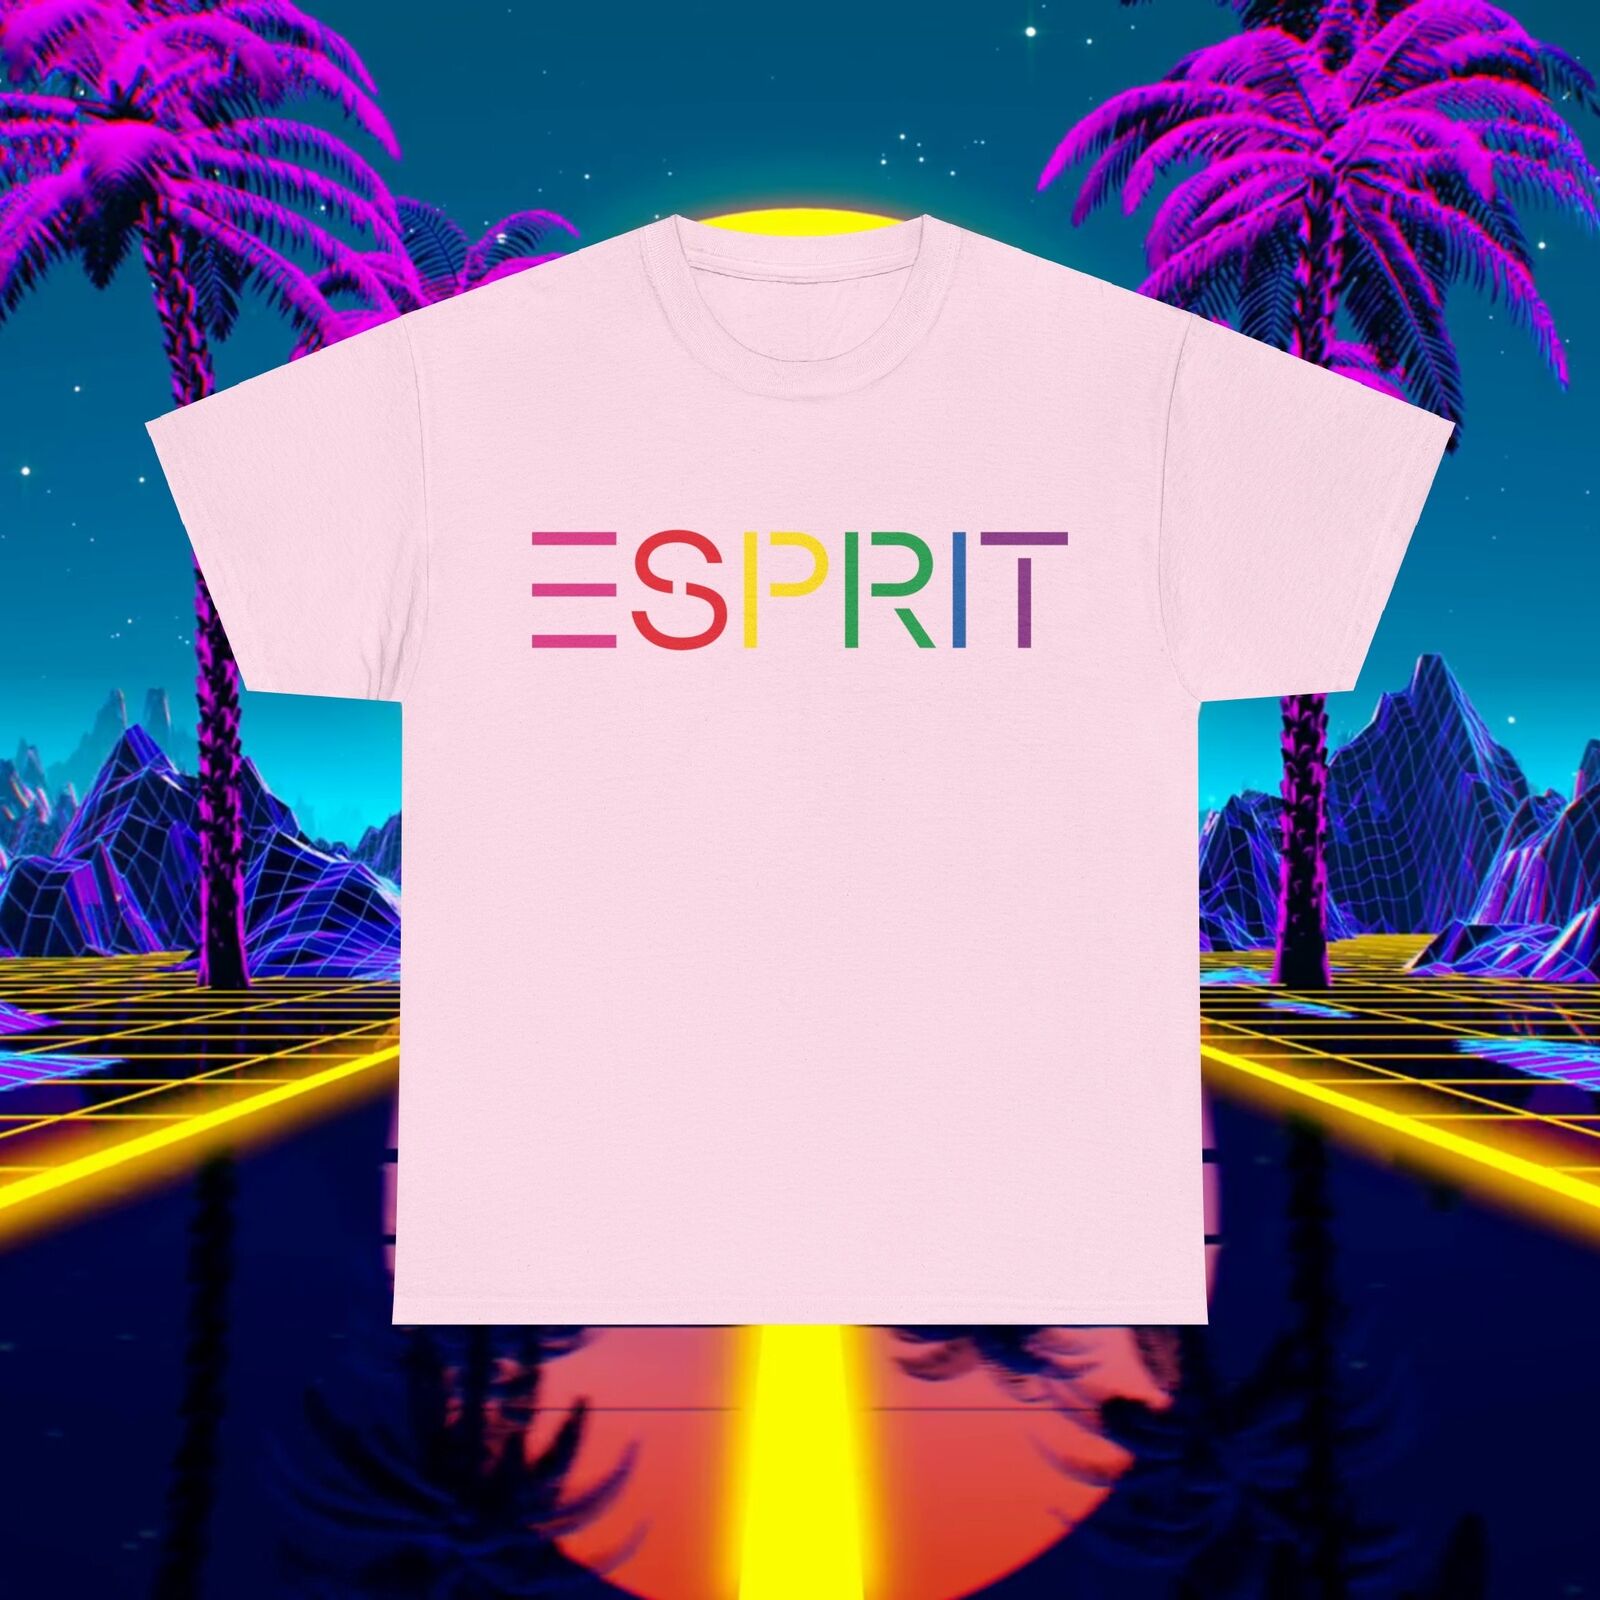 Custom ESPRIT vintage 1980s design T-shirt, Unisex for men and women shirt Tee